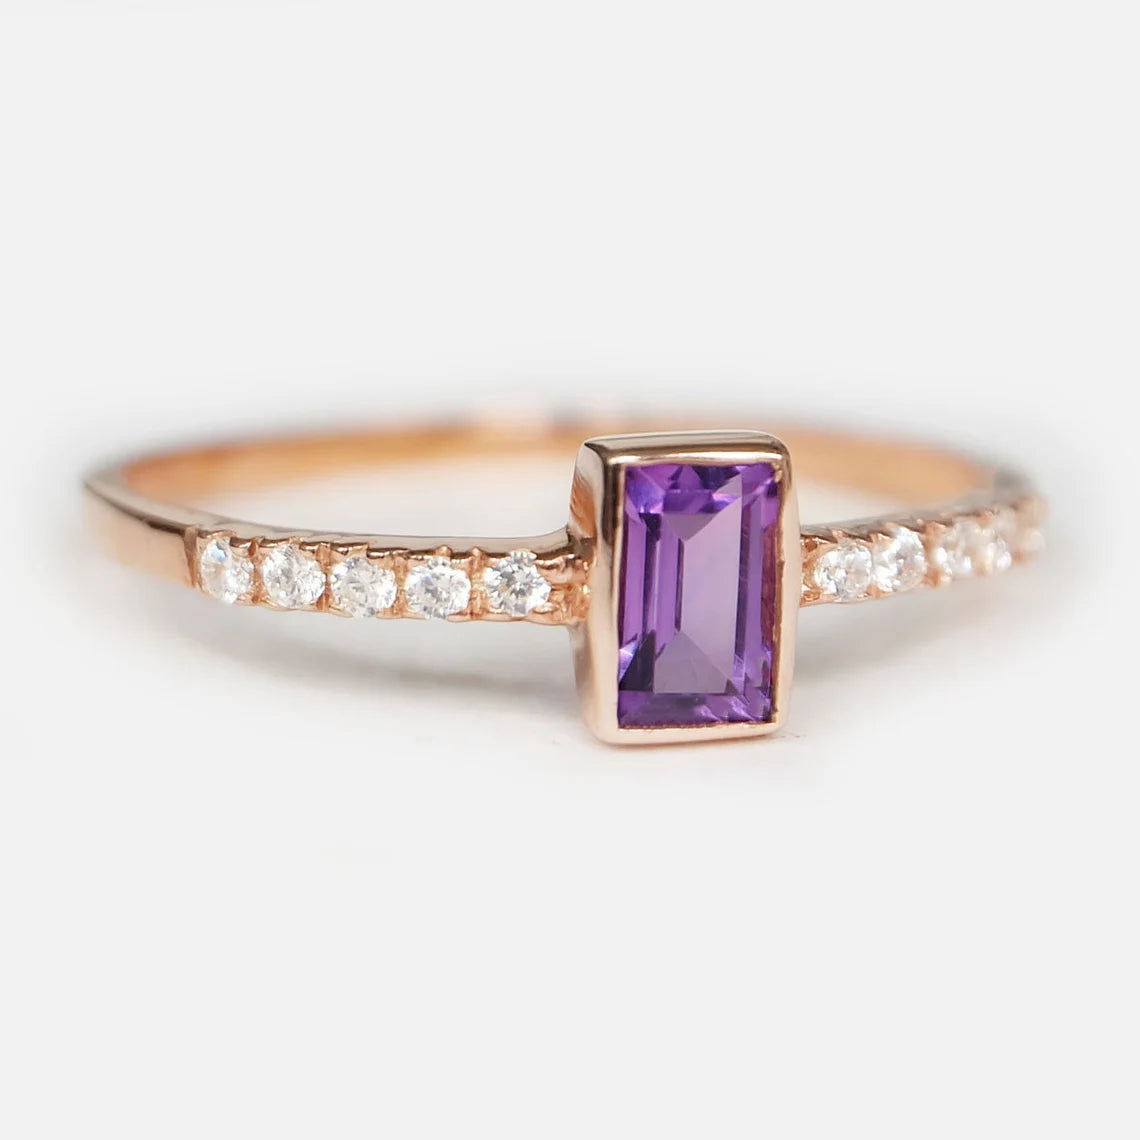 Amethyst Emerald Cut Statement Rings - 14k Rose Gold Vermeil Ring